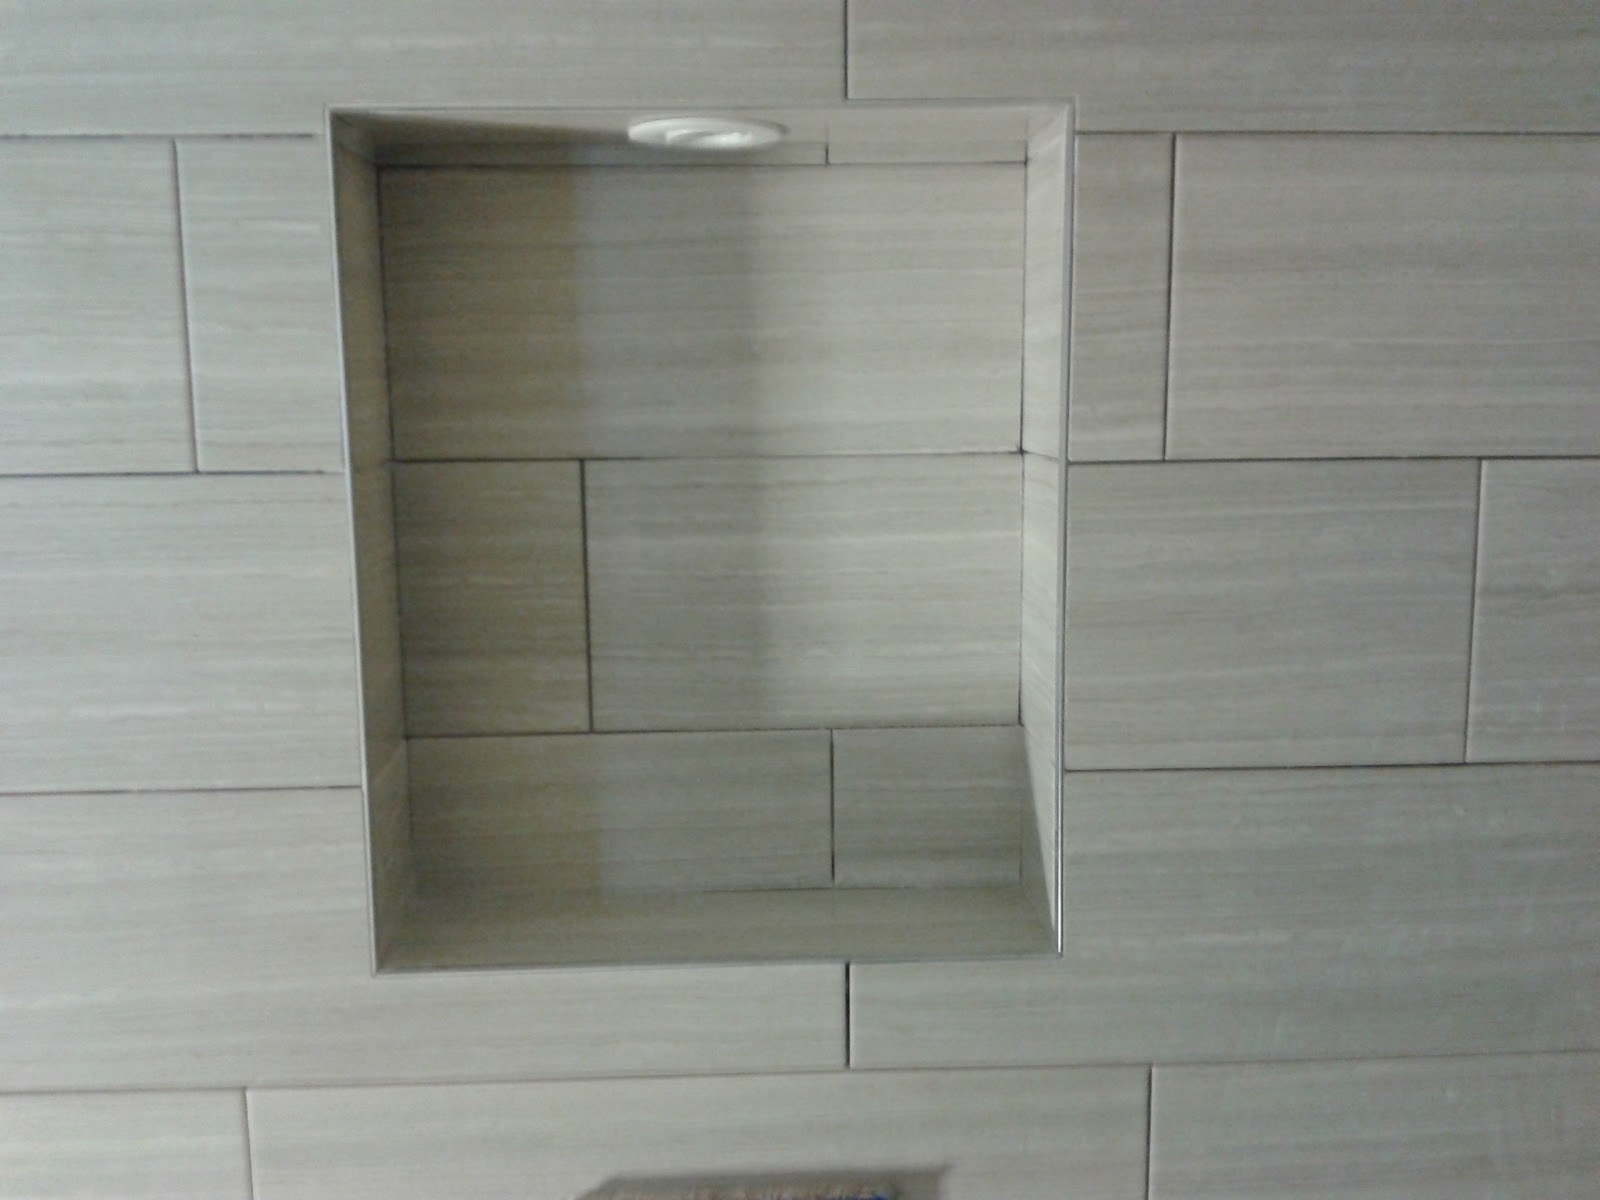 Floor To Ceiling Tiles Floor To Ceiling Tiles dan right tile dan bochart custom tile work bathrooms and kitchens 1600 X 1200